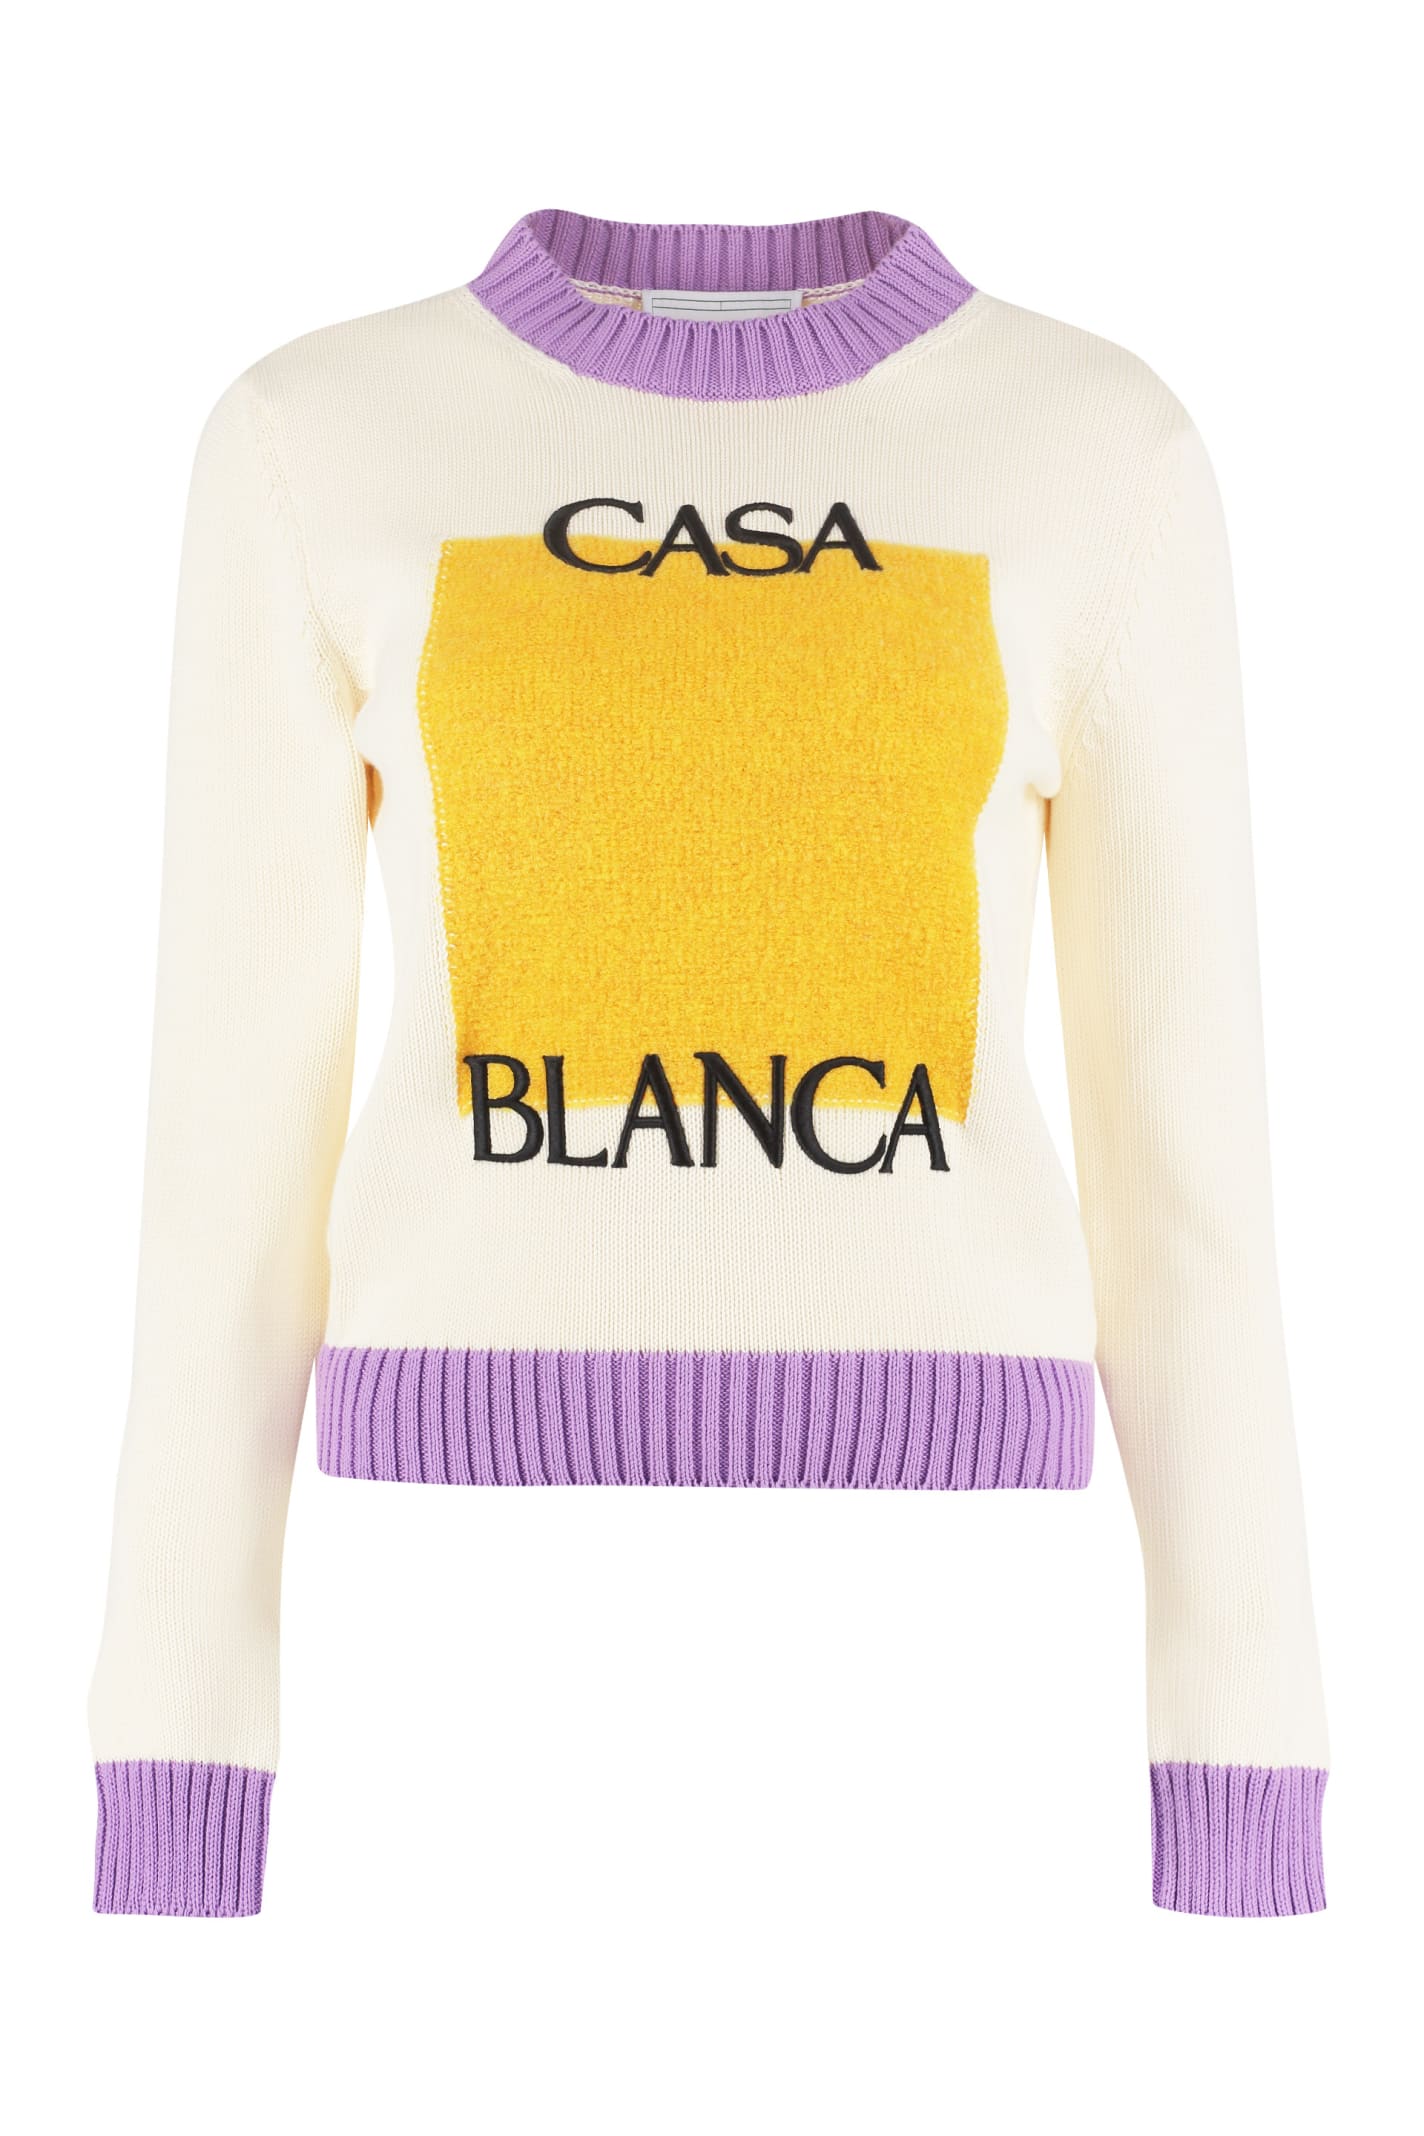 Casablanca Cotton Crew-neck Sweater